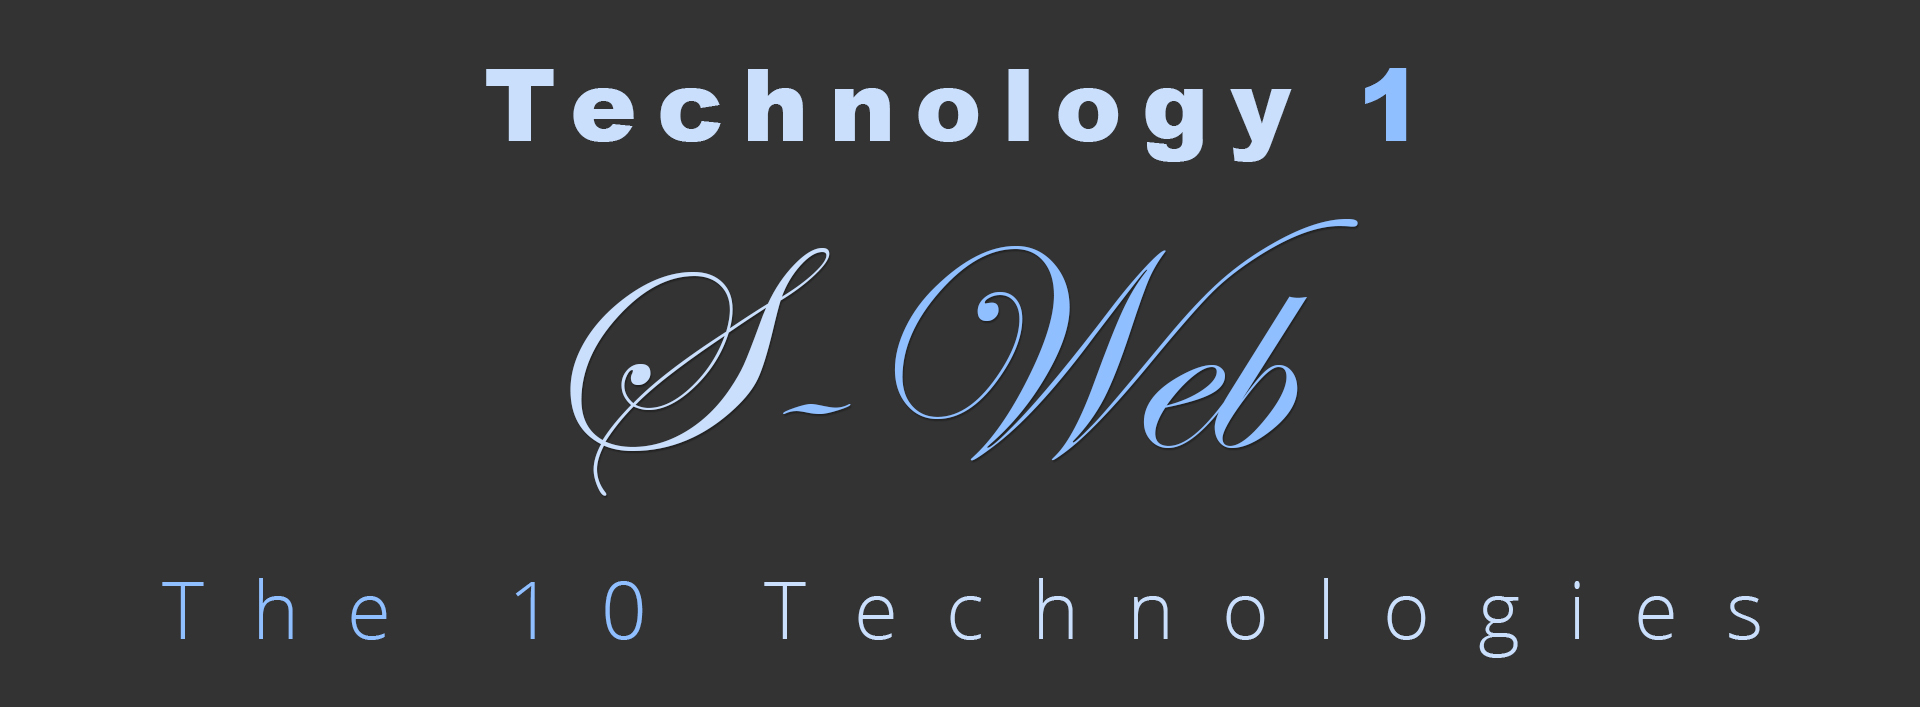 S-Web-Logo--Technology-1